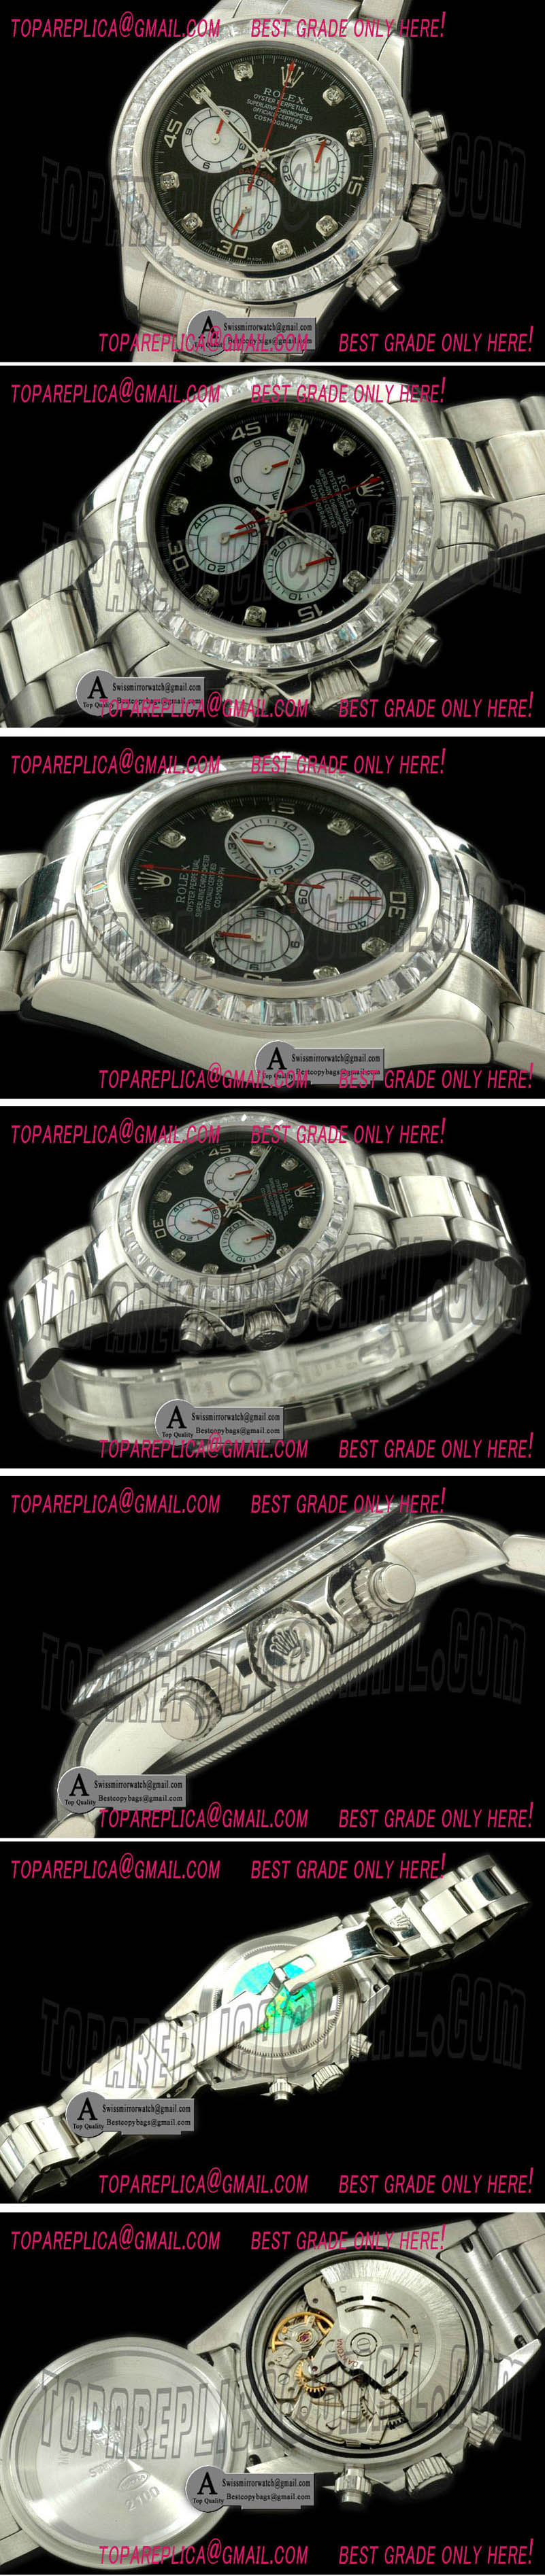 Rolex Daytona 2011 SS SQ Diamond SS Black White Diamond A 7750 Sec 6 28800 Replica Watches